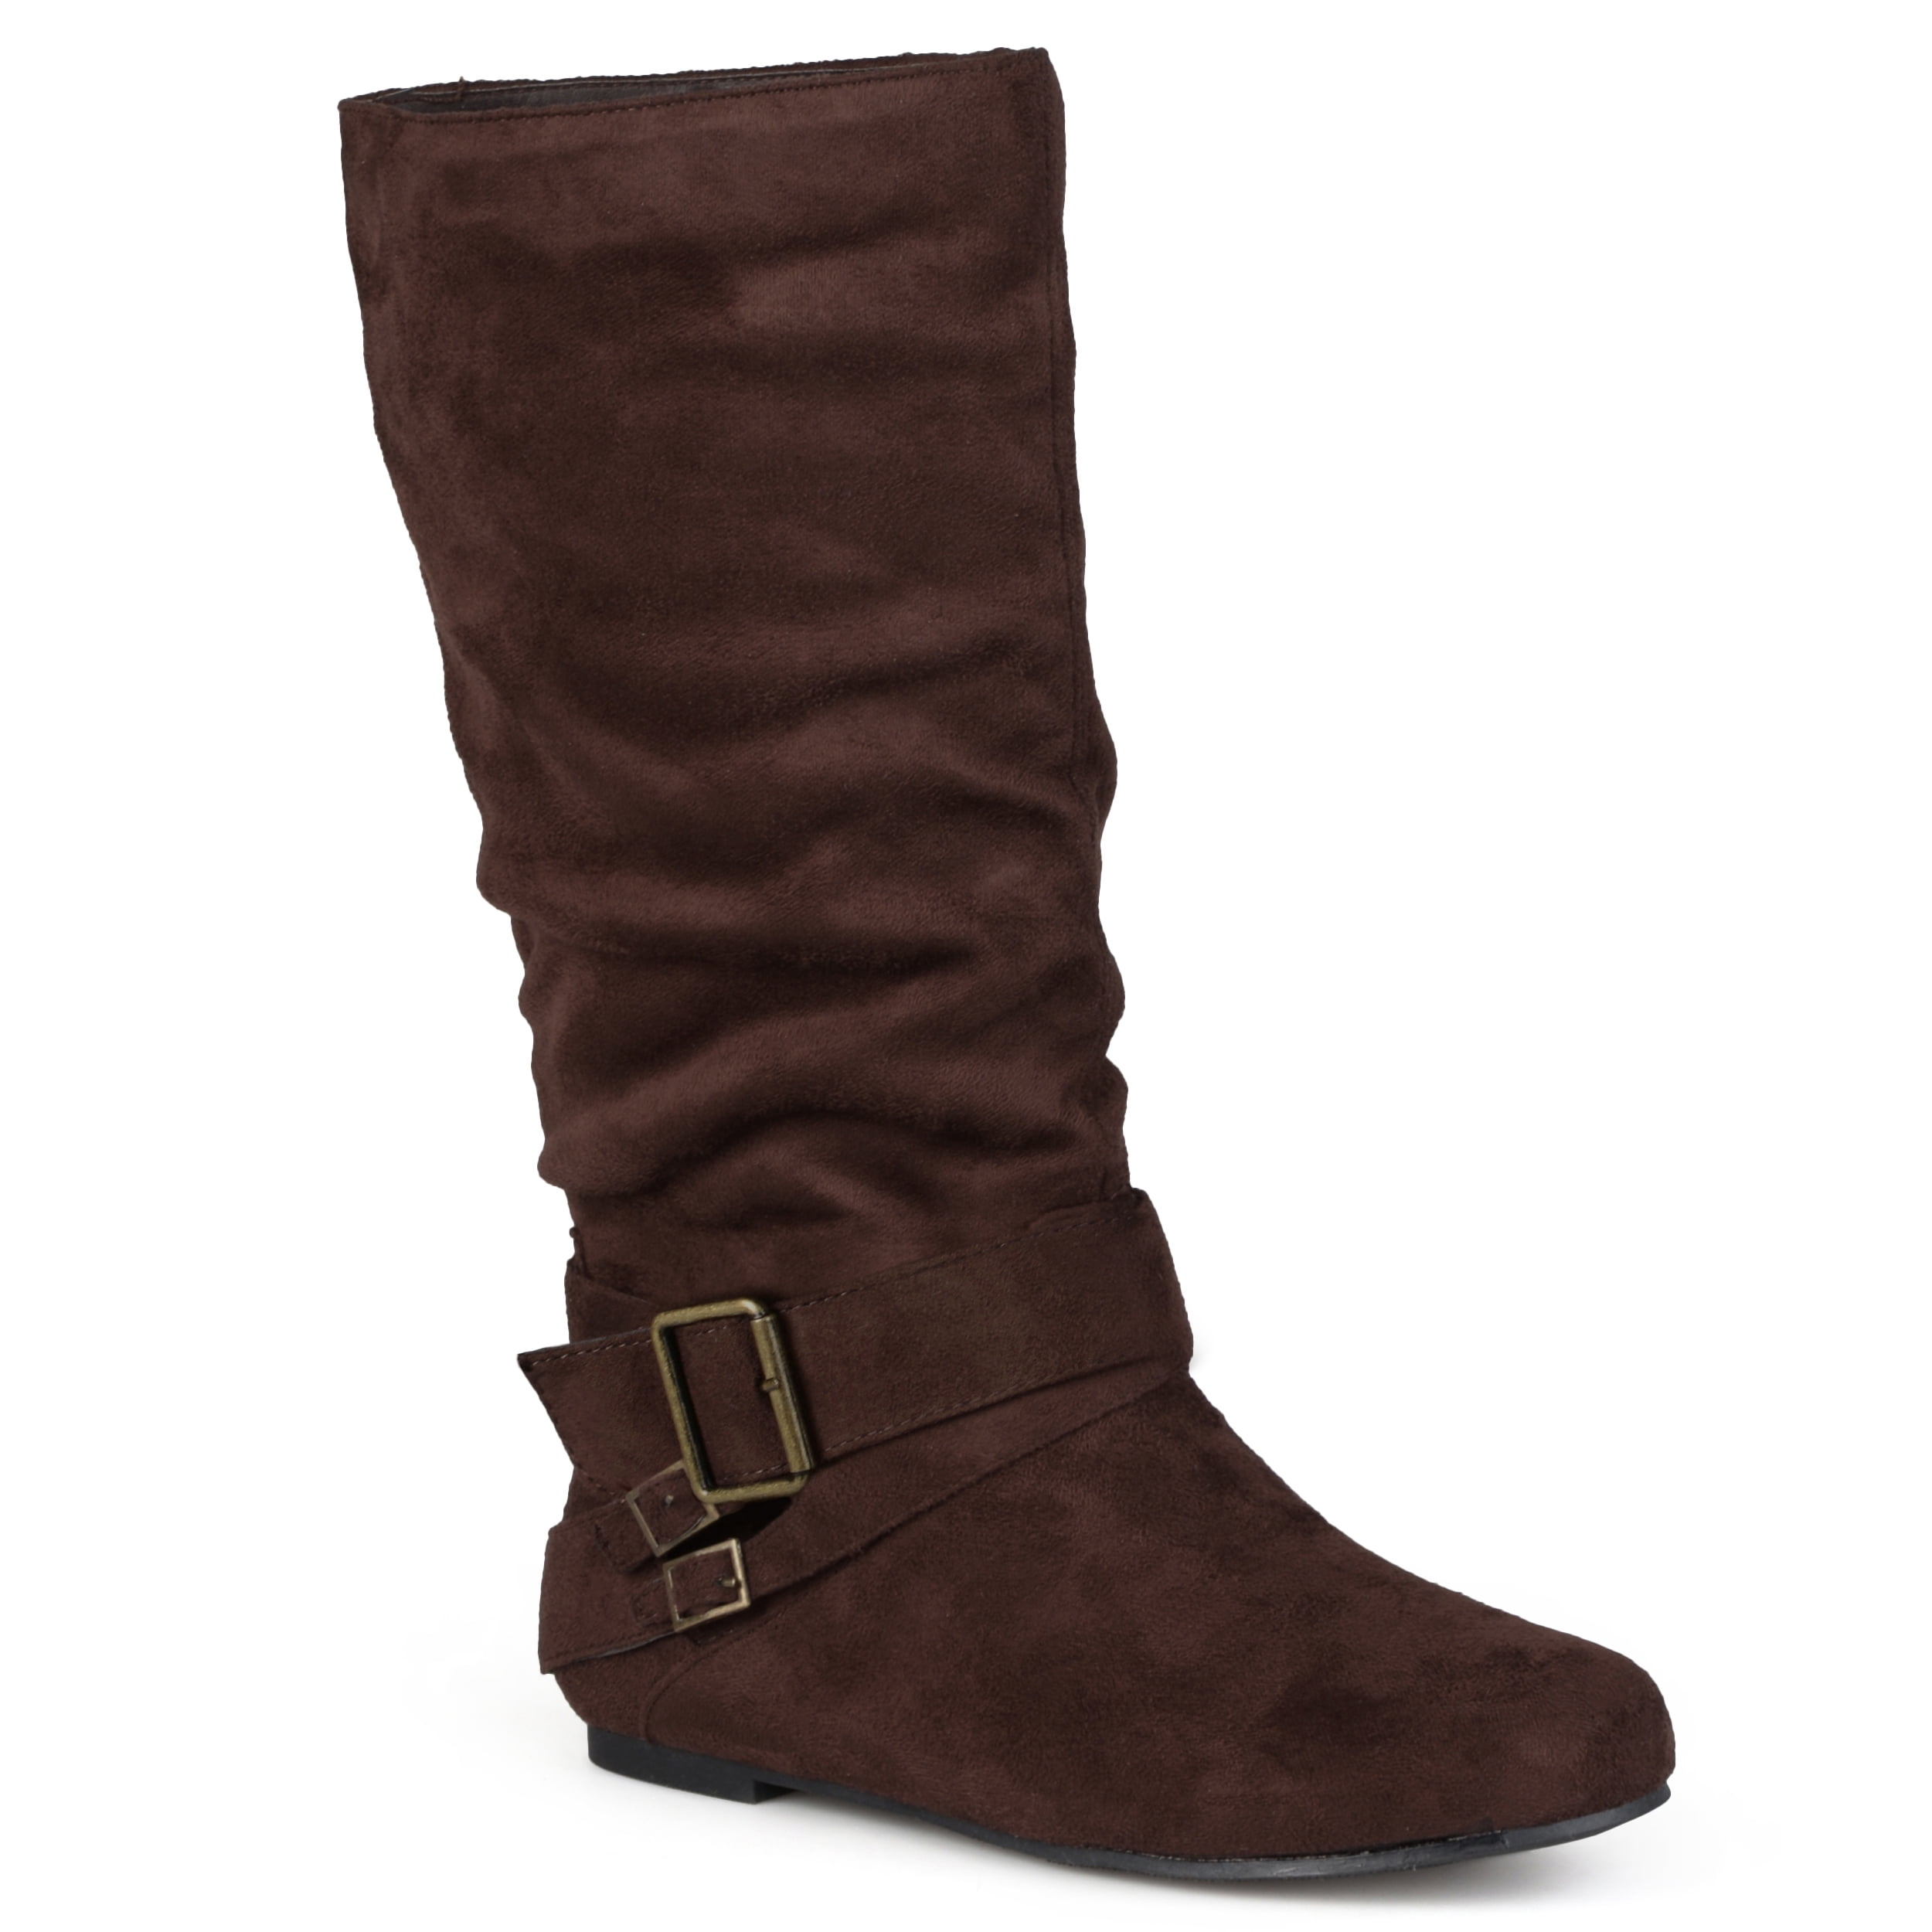 Brinley Co. Buckle Mid-Calf Slouch Boot (Women's) - Walmart.com